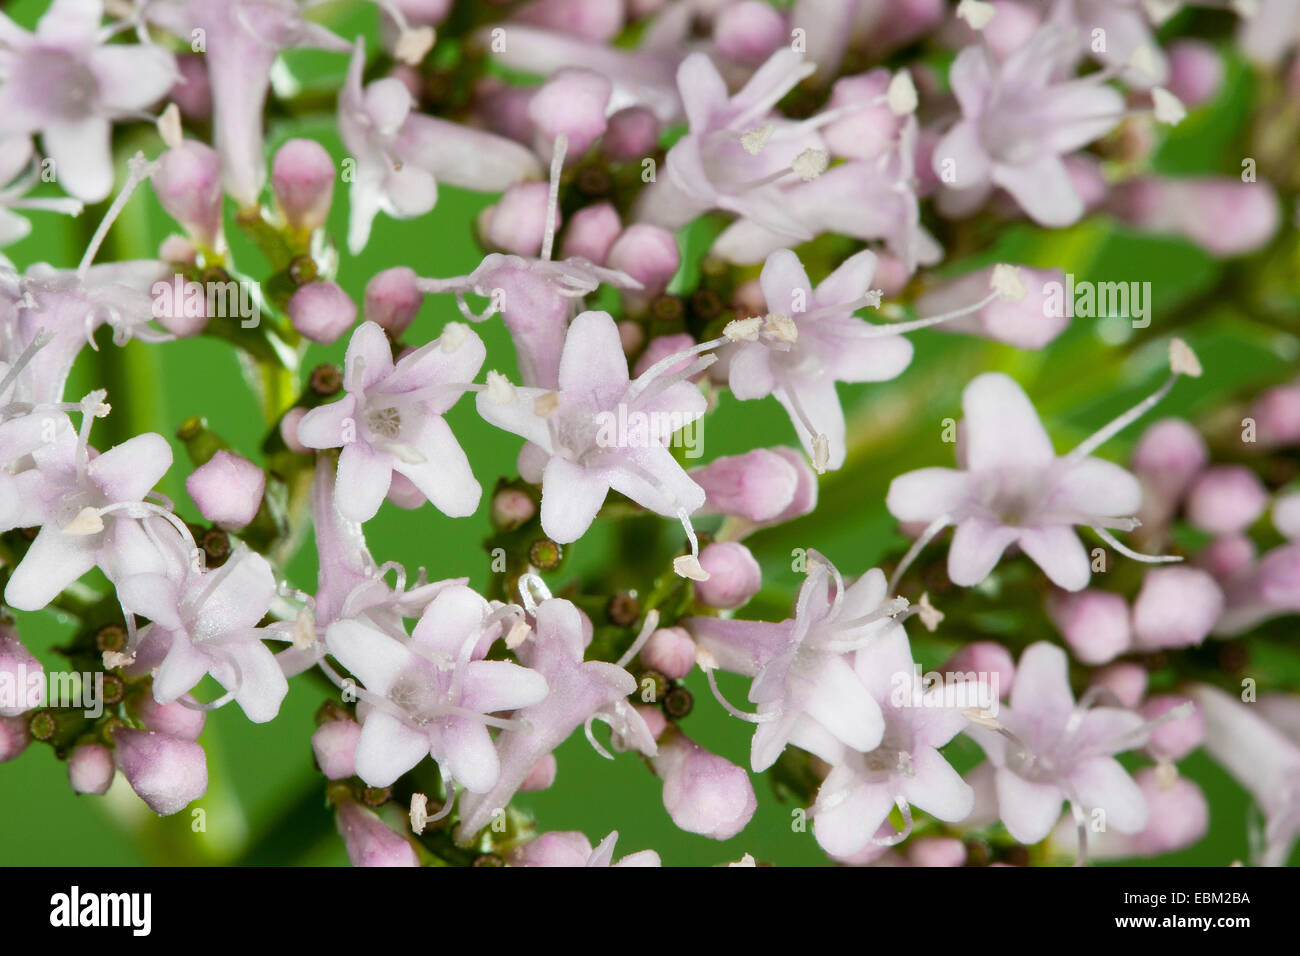 common valerian, all-heal, garden heliotrope, garden valerian (Valeriana officinalis), flowers, Germany Stock Photo